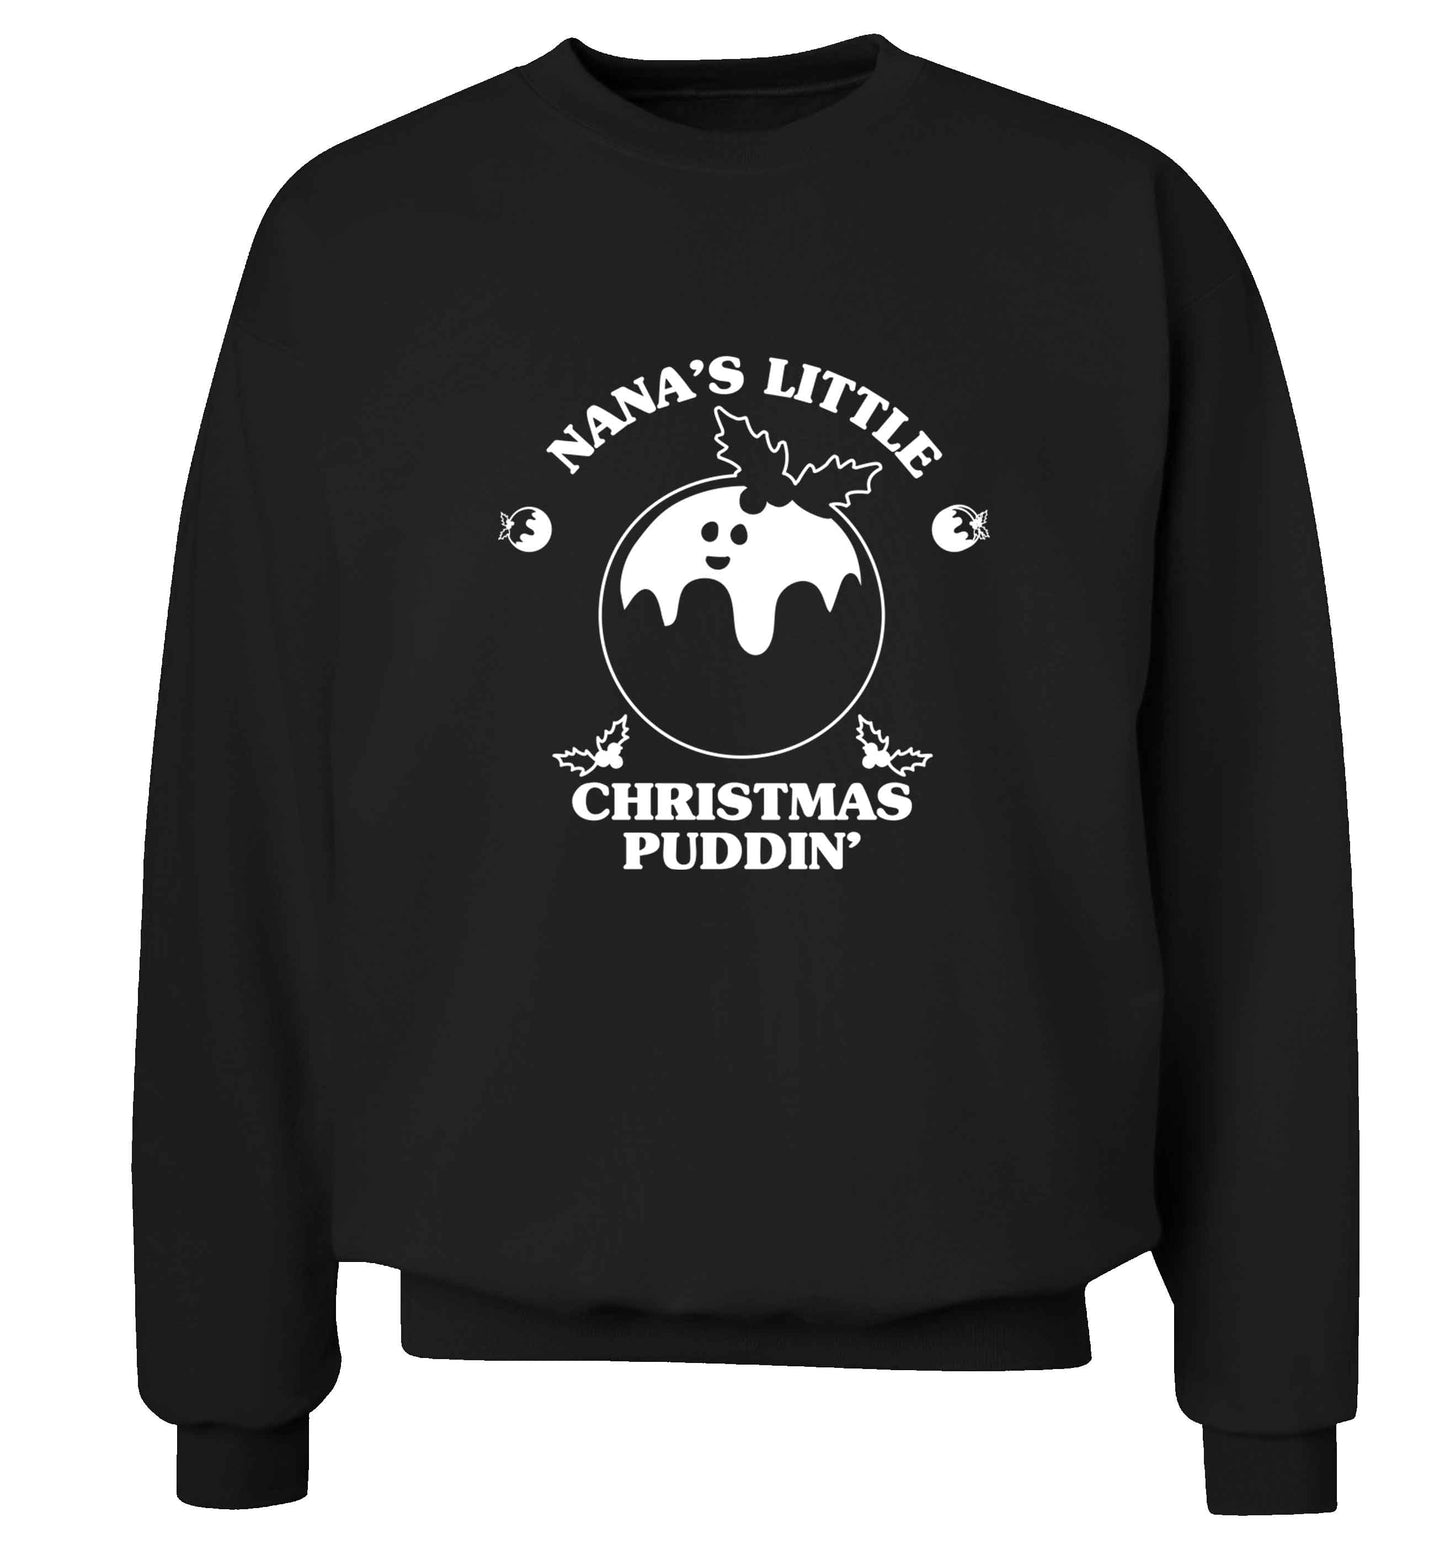 Nana's little Christmas puddin' Adult's unisex black Sweater 2XL